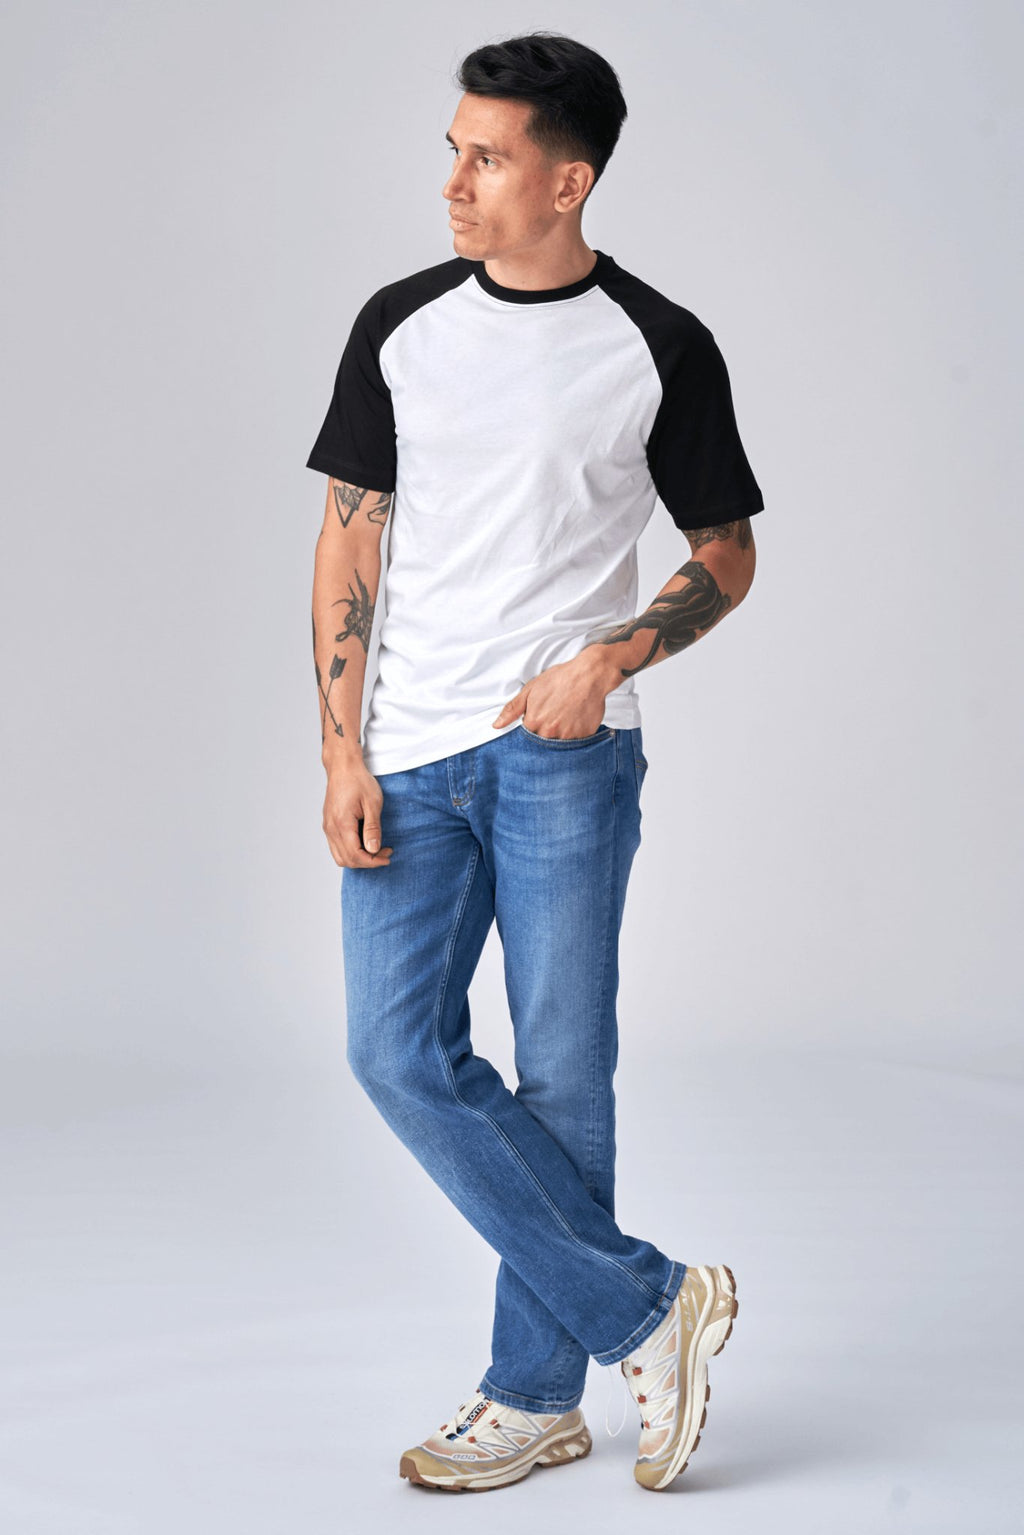 Basic raglan t -shirt - μαύρο και άσπρο